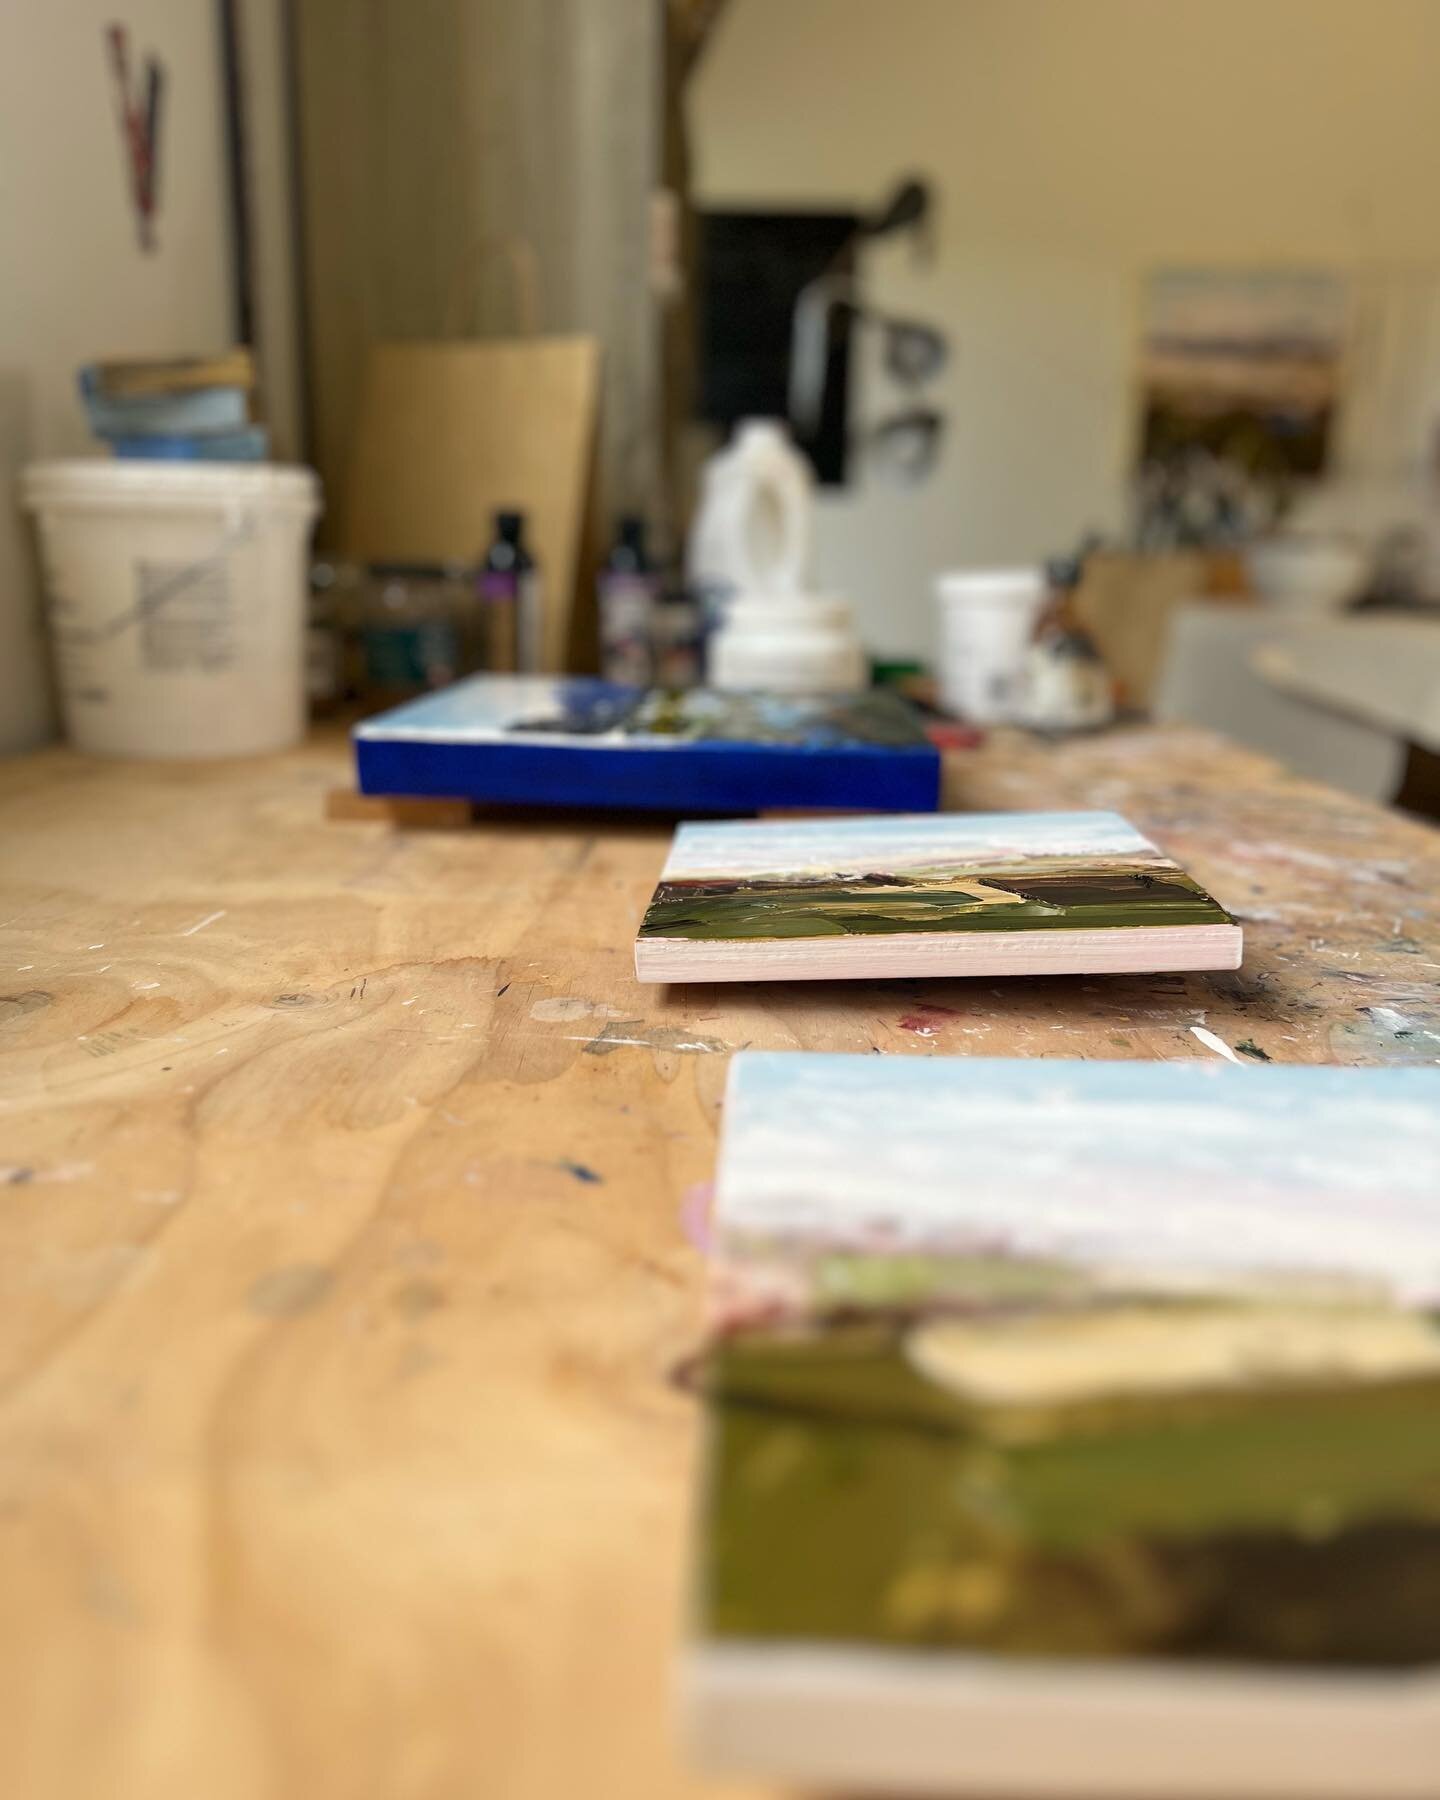 Balancing.
Painted edges drying in the studio.

#oilpaint #oilpainting #paletteknifepainting #inmystudio #studioscenes #wip #artpractice #artiststudio #artistlife #creativeprocess #ontheeasel #mystudiotoday #artprocess #lifeofanartist #artwork_in_stu